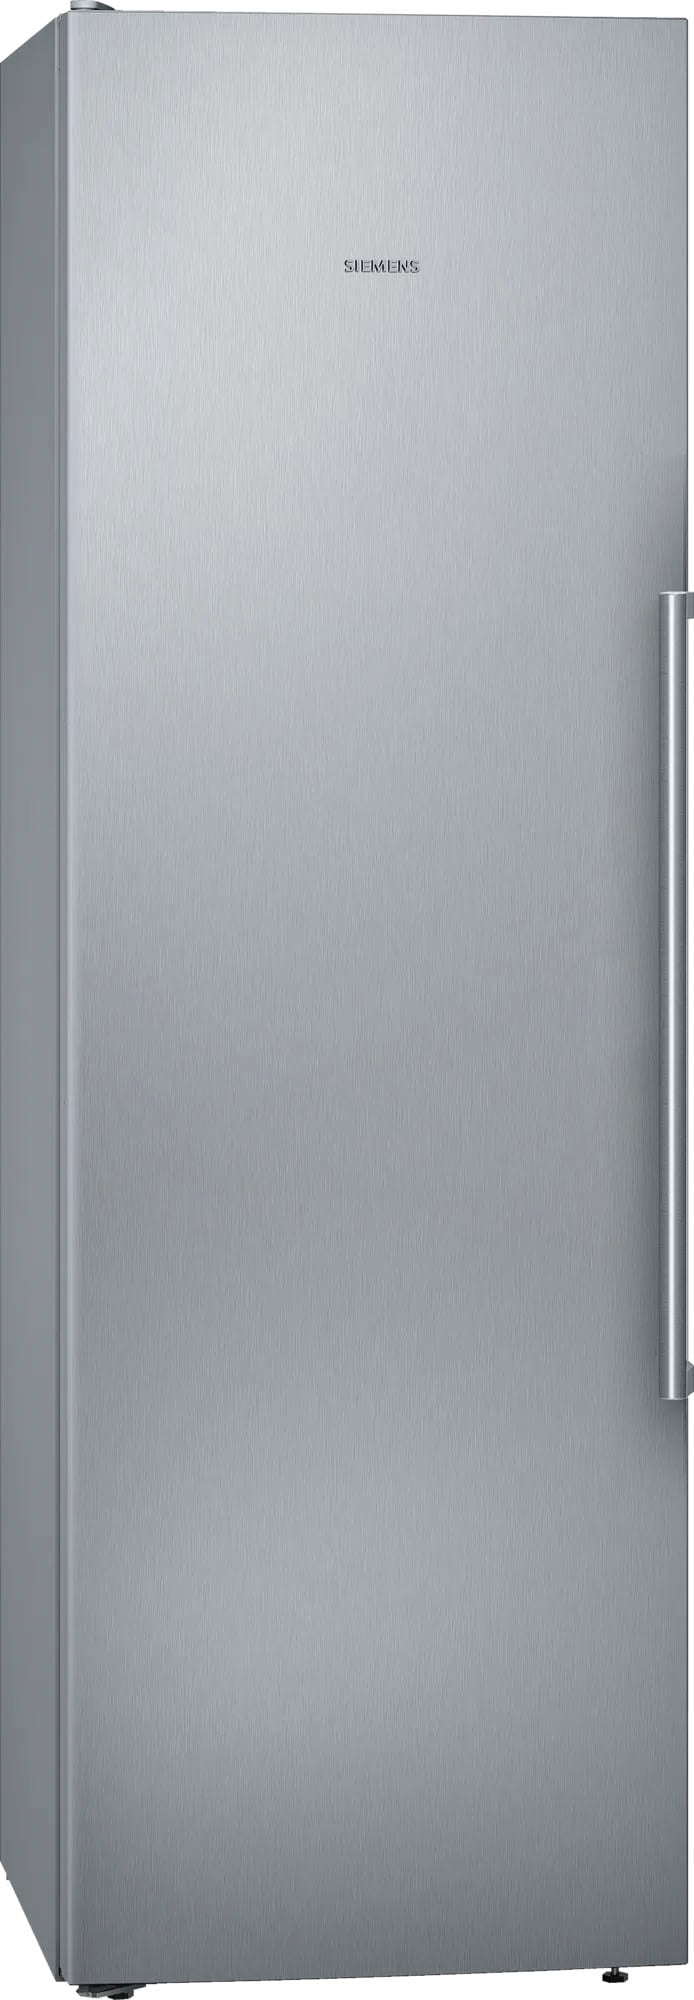 SIEMENS Kühlschrank "KS36FPIDP", KS36FPIDP, 186 cm hoch, 60 cm breit